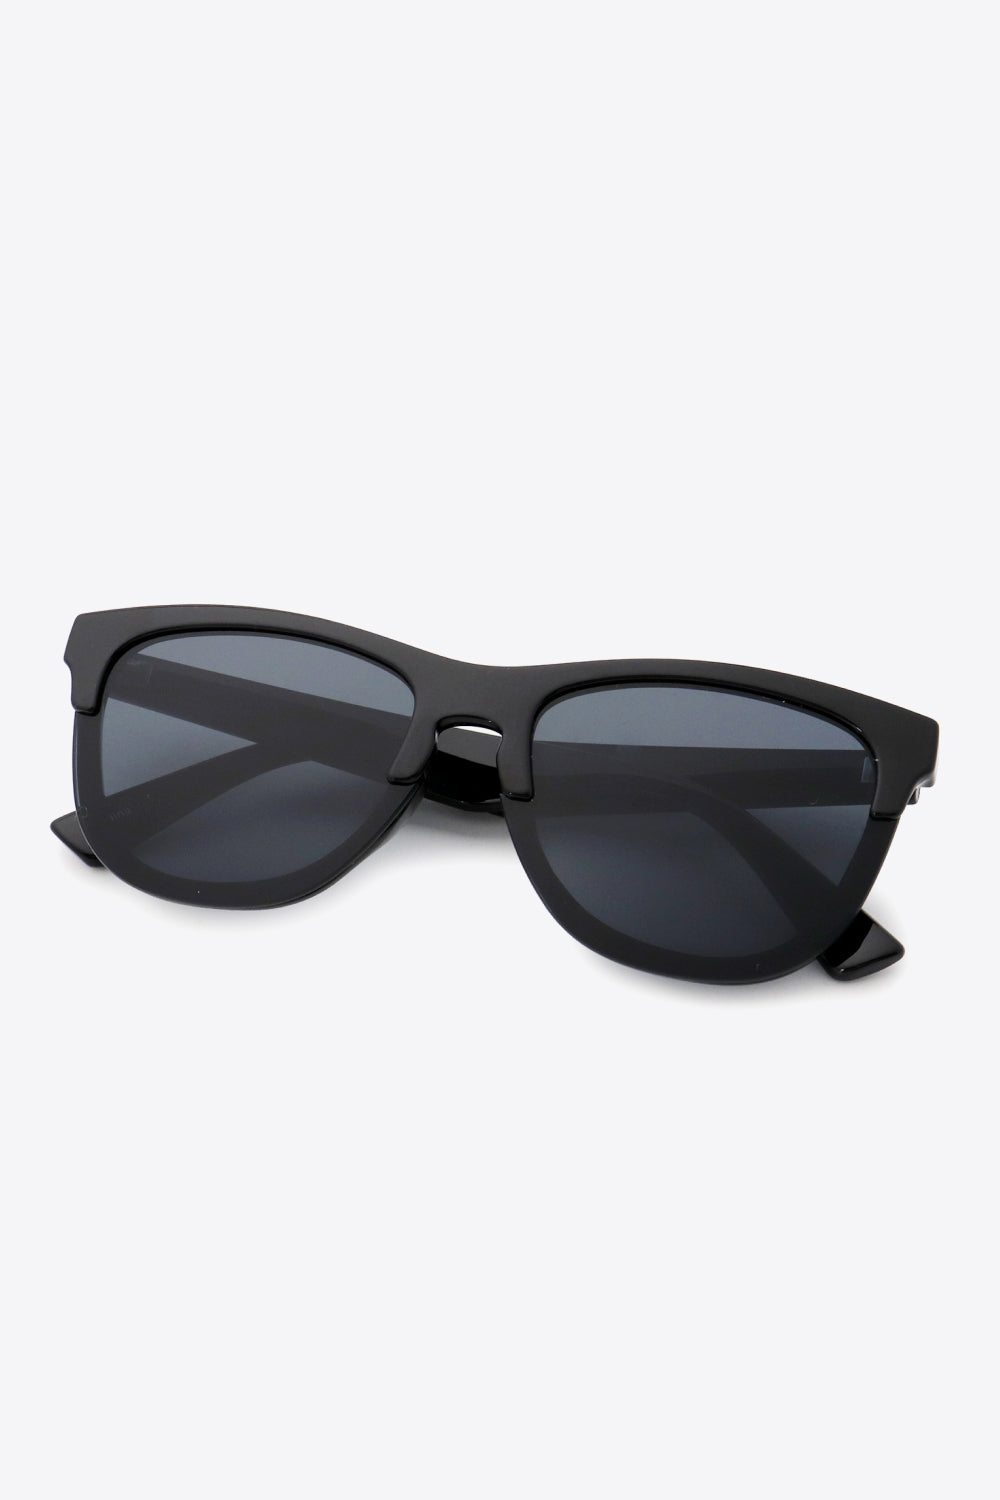 Capetown Wayfarer Sunglasses